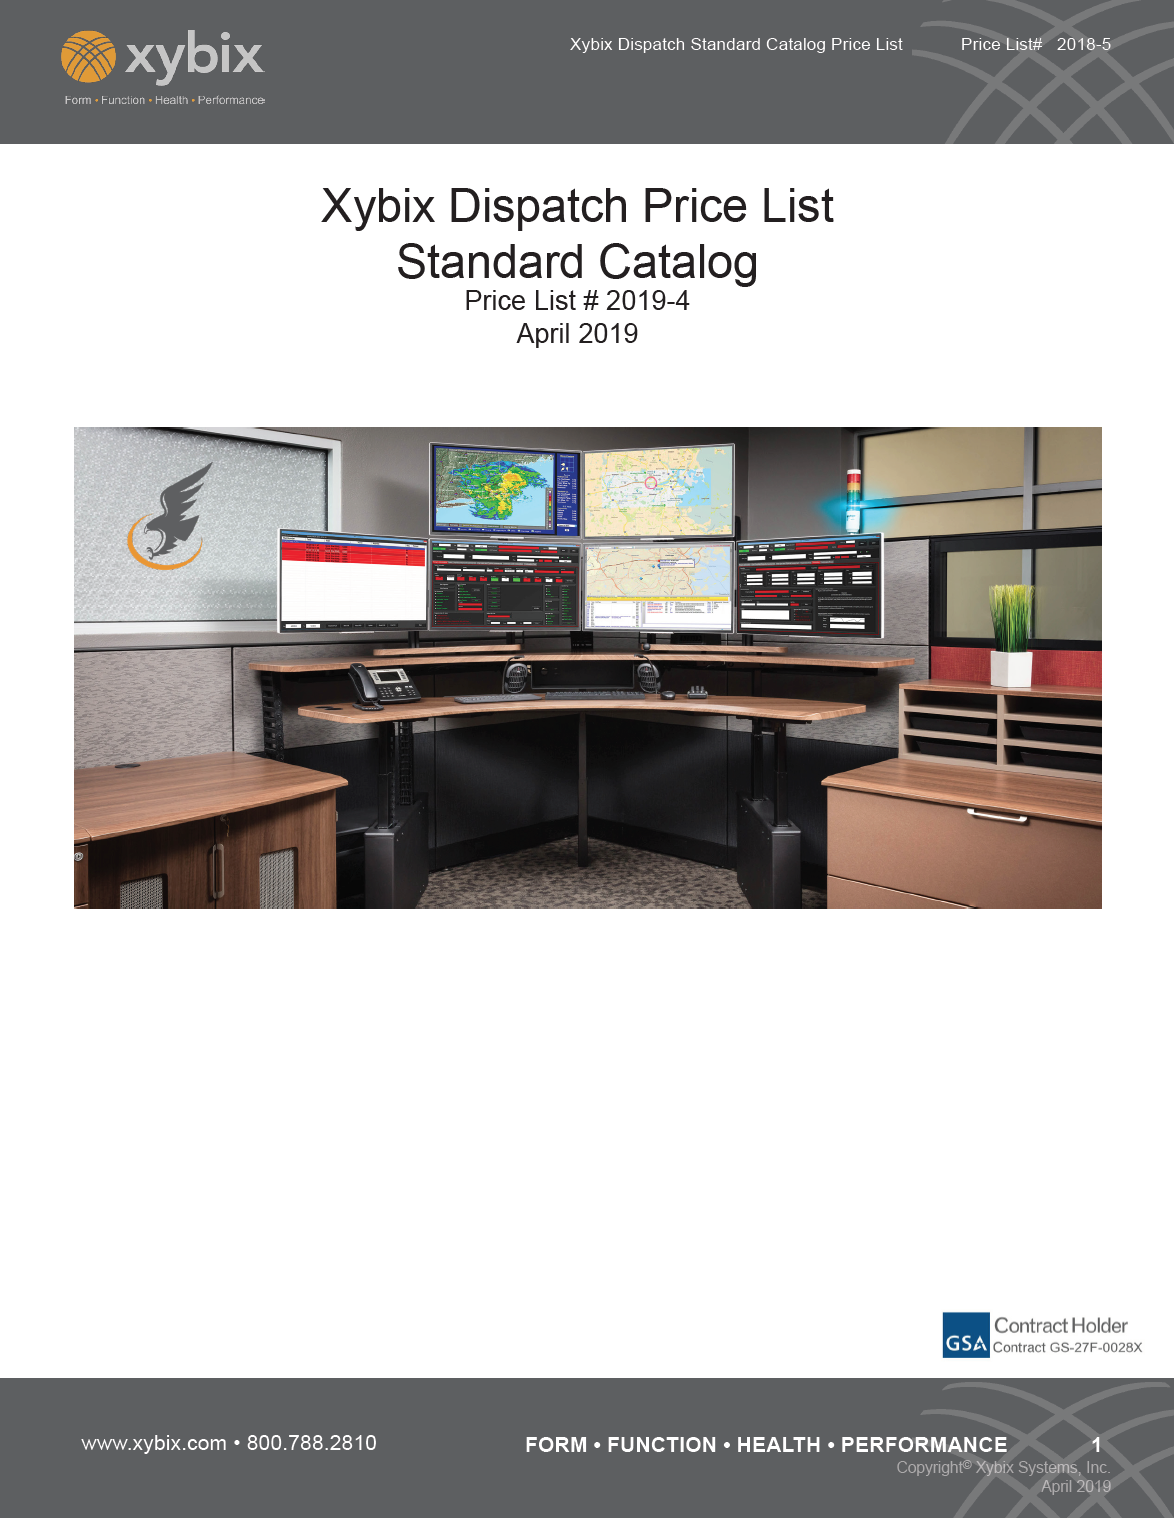 Xybix Pricing Information